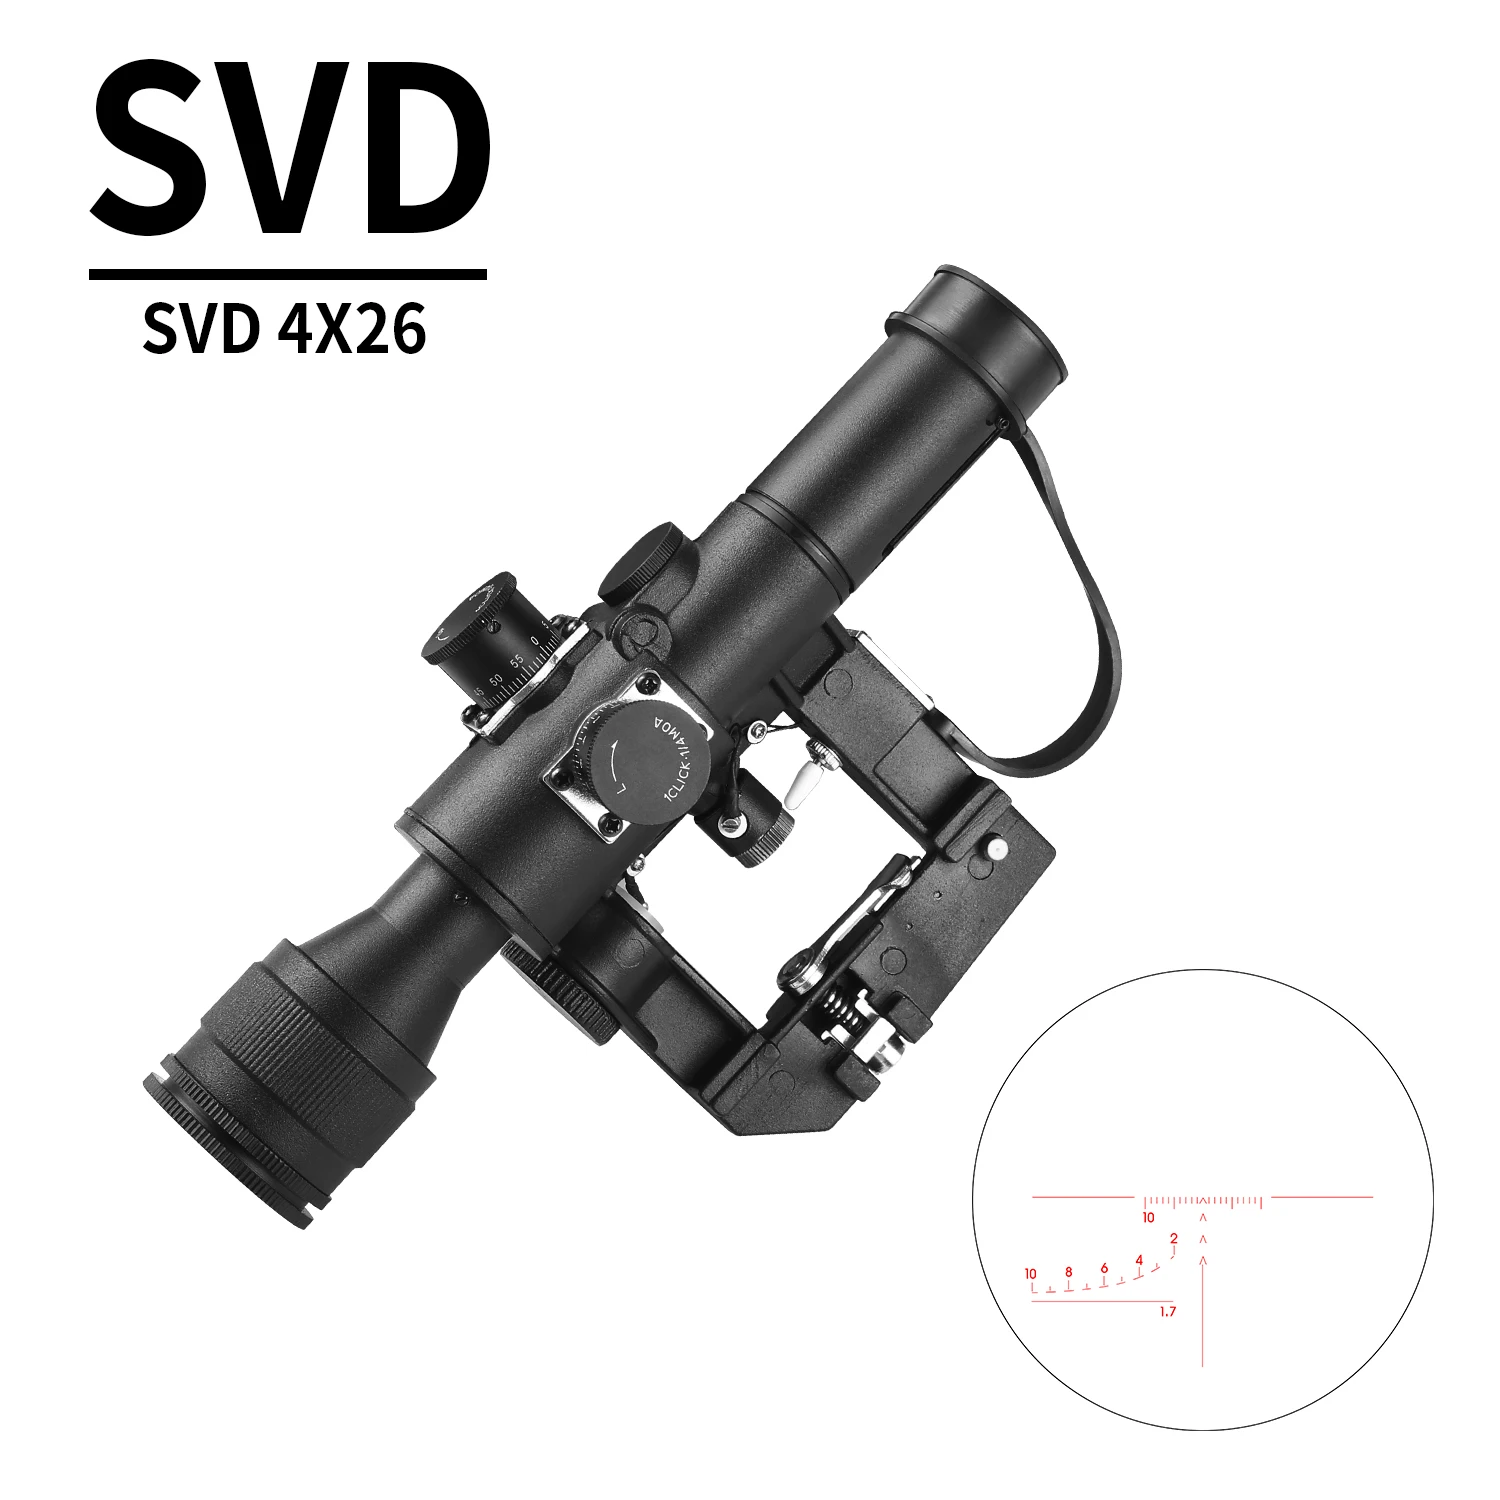 

SVD 4x26 PSO Type Riflescope Sniper Rifle Series AK Rifle Scope for Hunting Sight Dragunov Optics Red Illuminated Optical sight